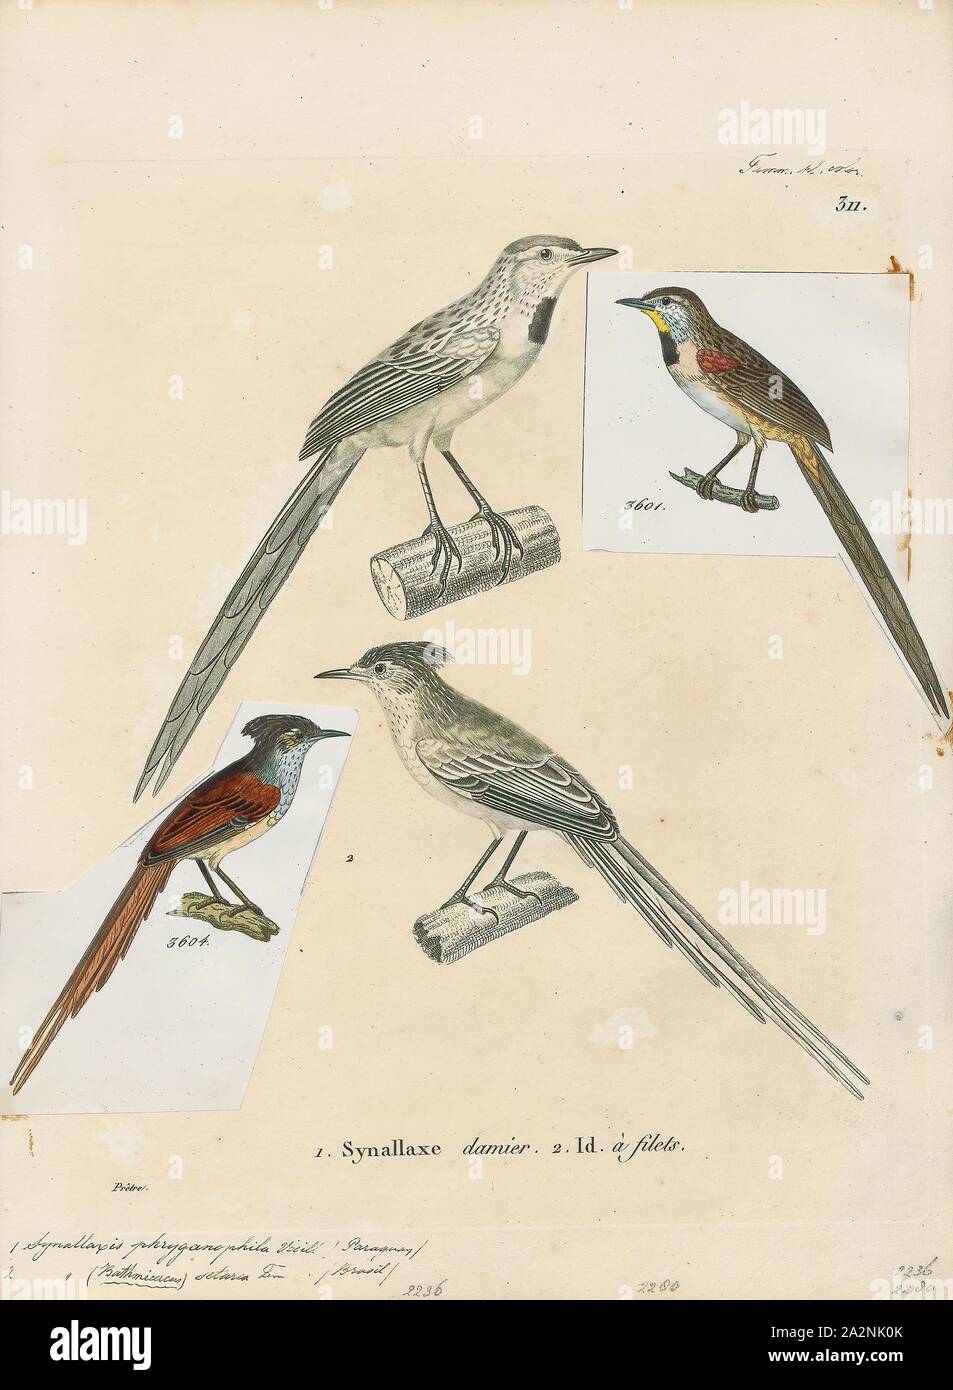 Synallaxis phryganophila, Print, Synallaxis is a genus of birds in the ovenbird family, Furnariidae., 1700-1880 Stock Photo